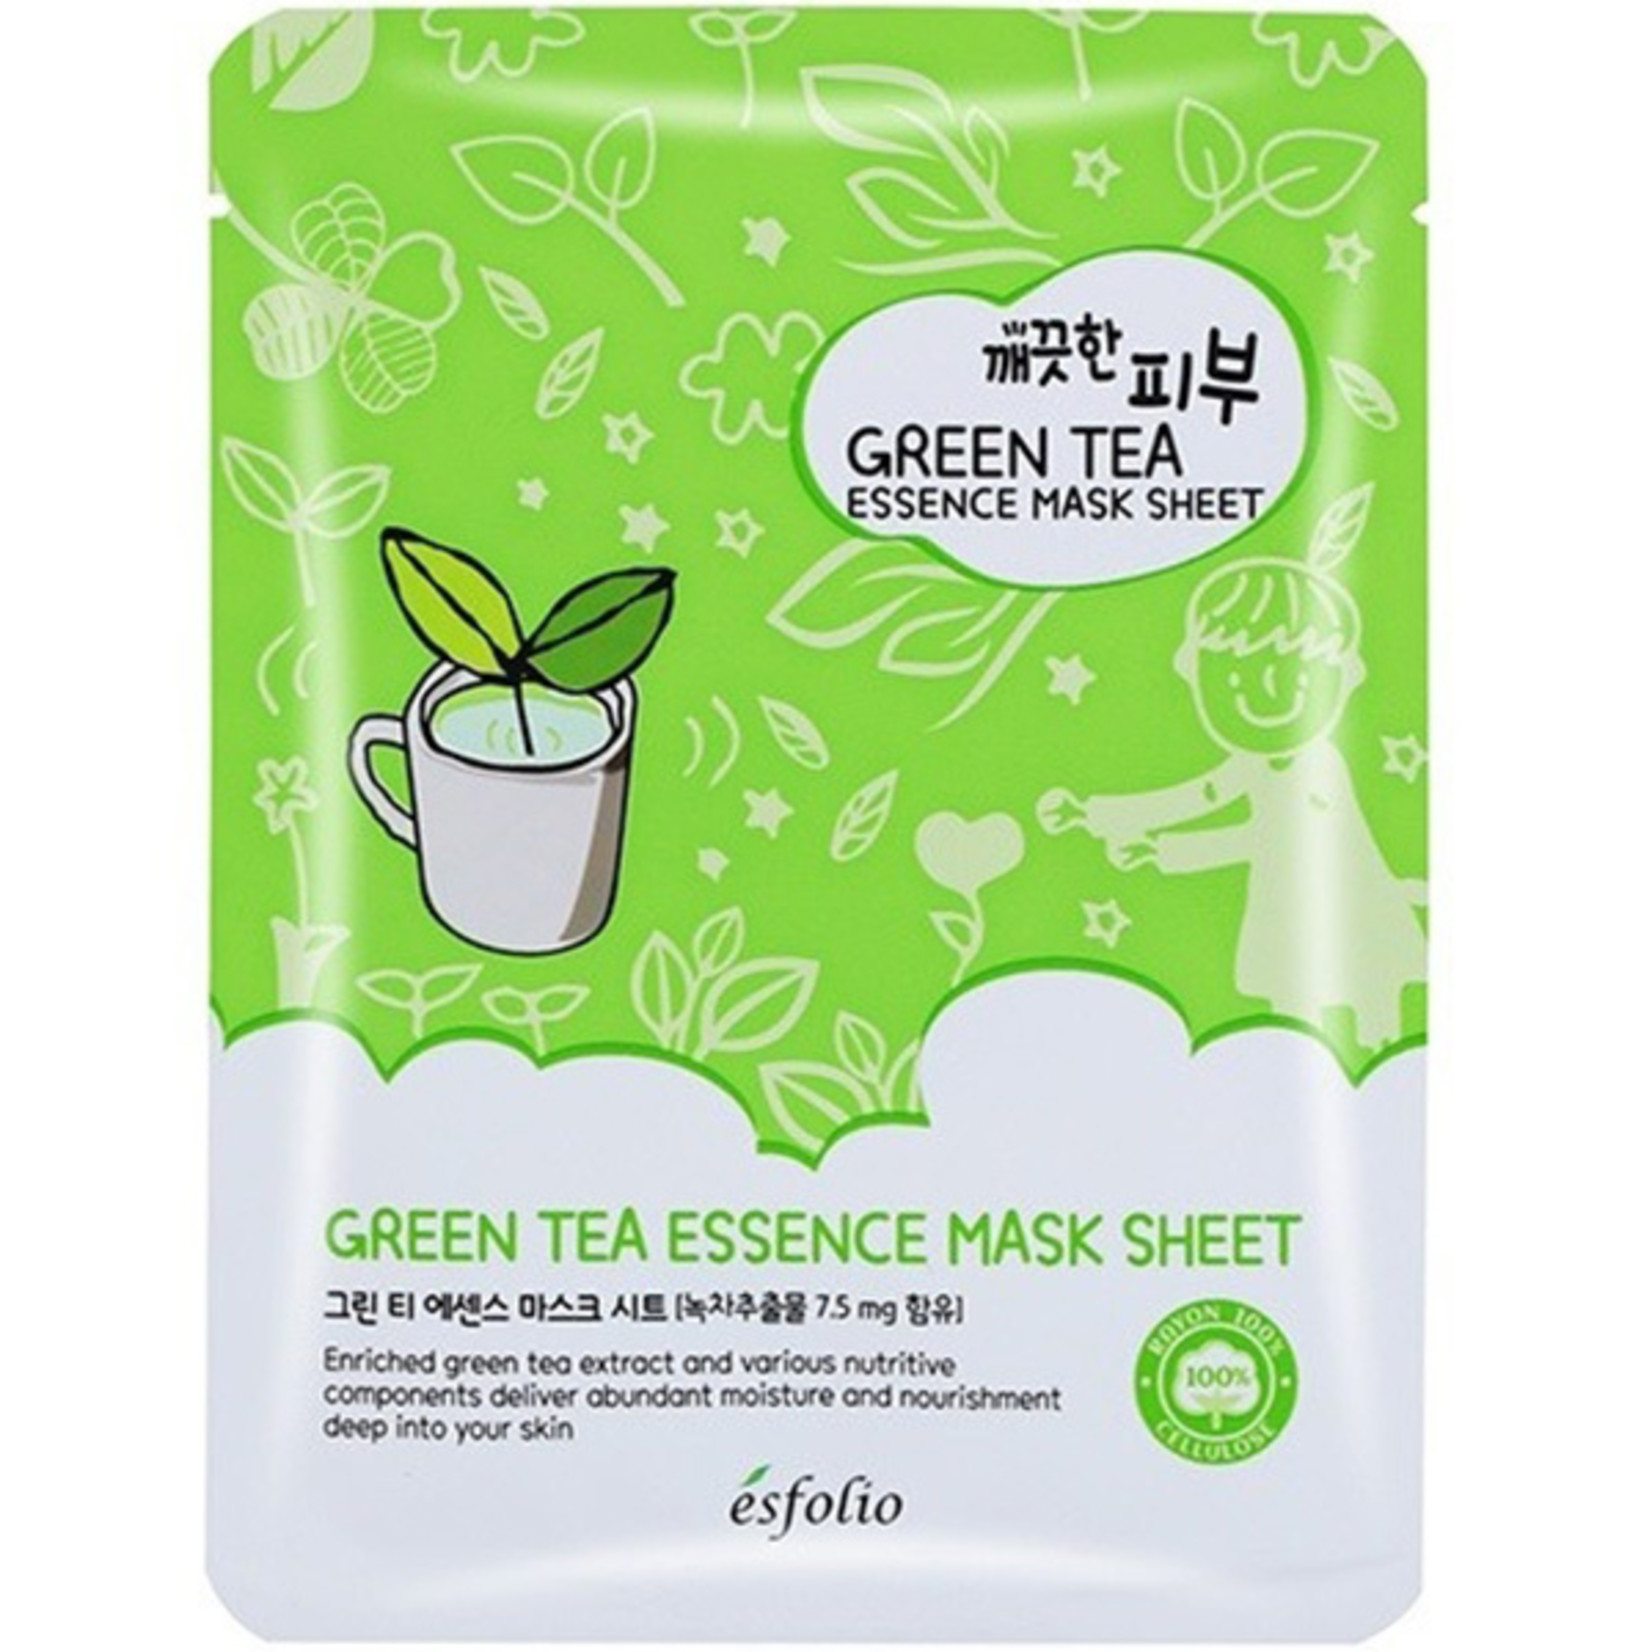 esfolio Pure Skin Green Tea Essence Sheet Mask